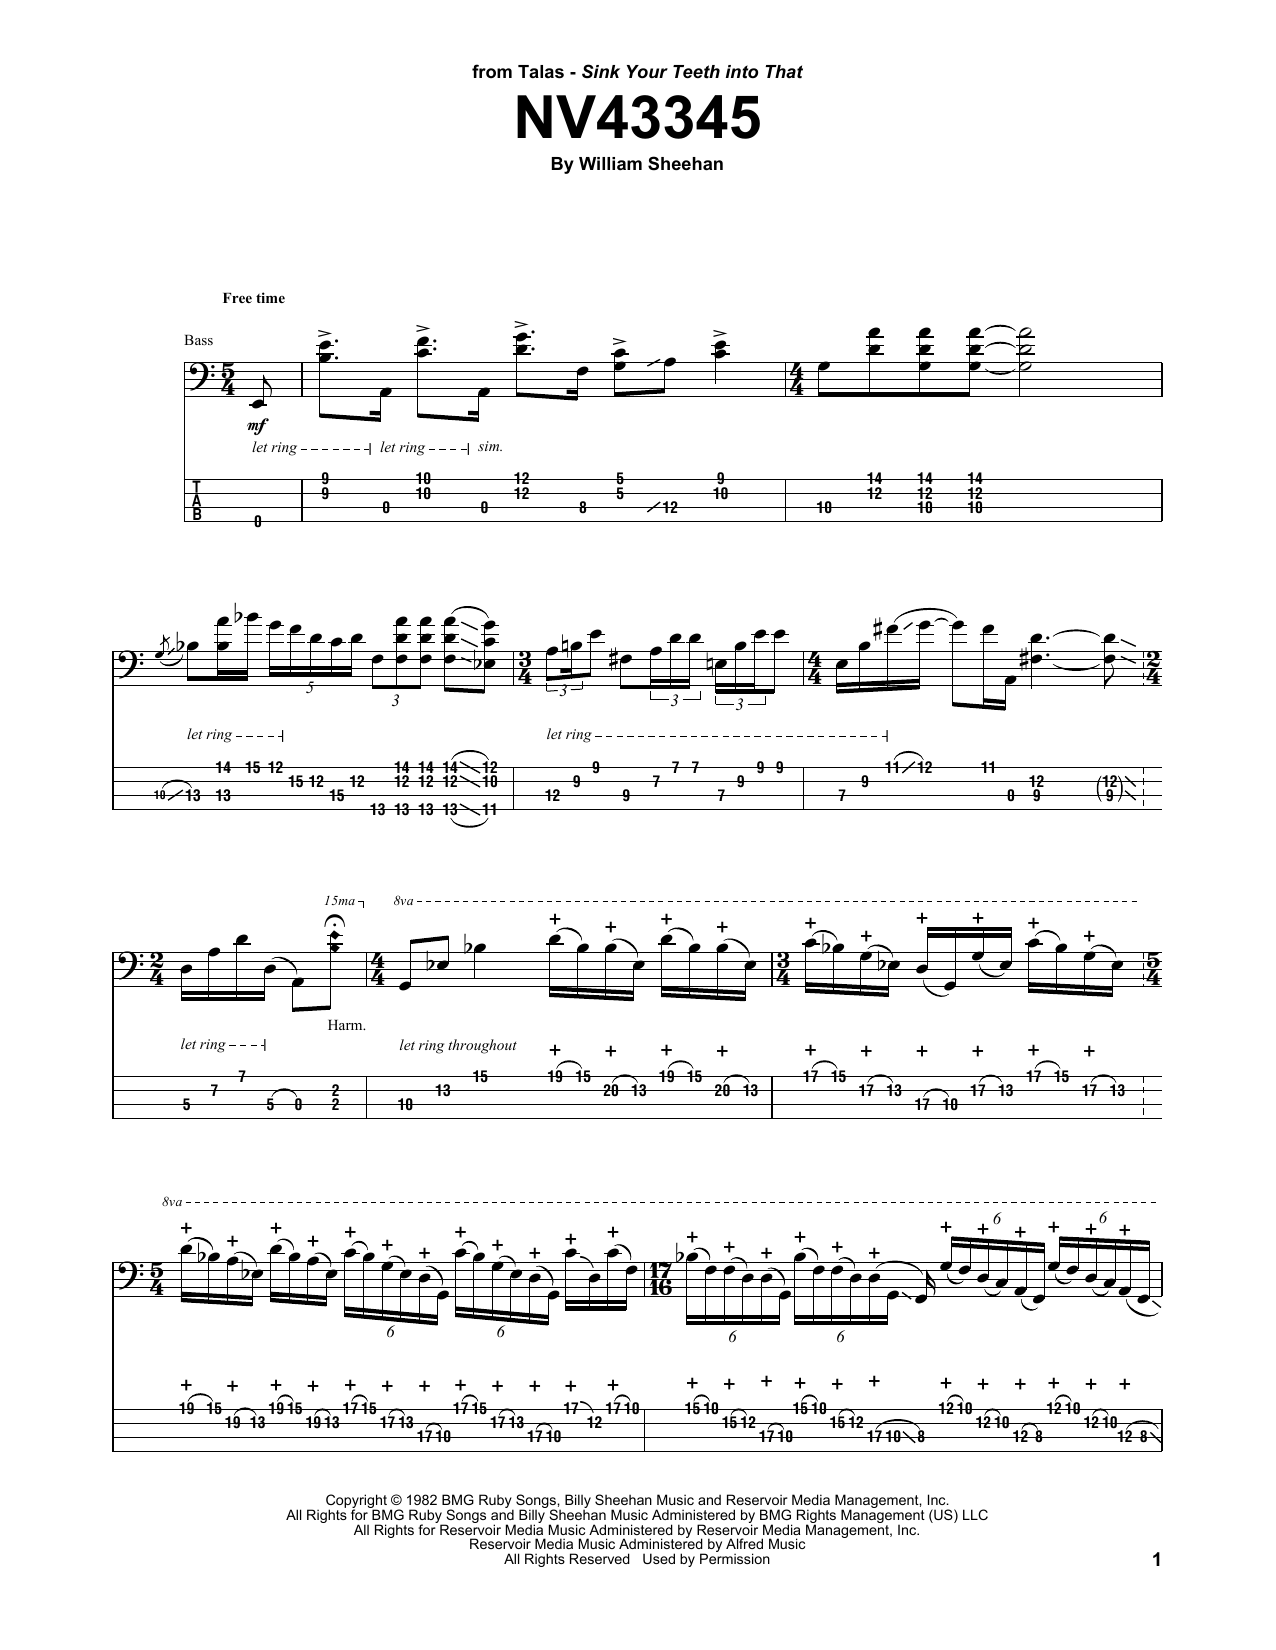 Billy Sheehan NV43345 Sheet Music Notes & Chords for Bass Guitar Tab - Download or Print PDF